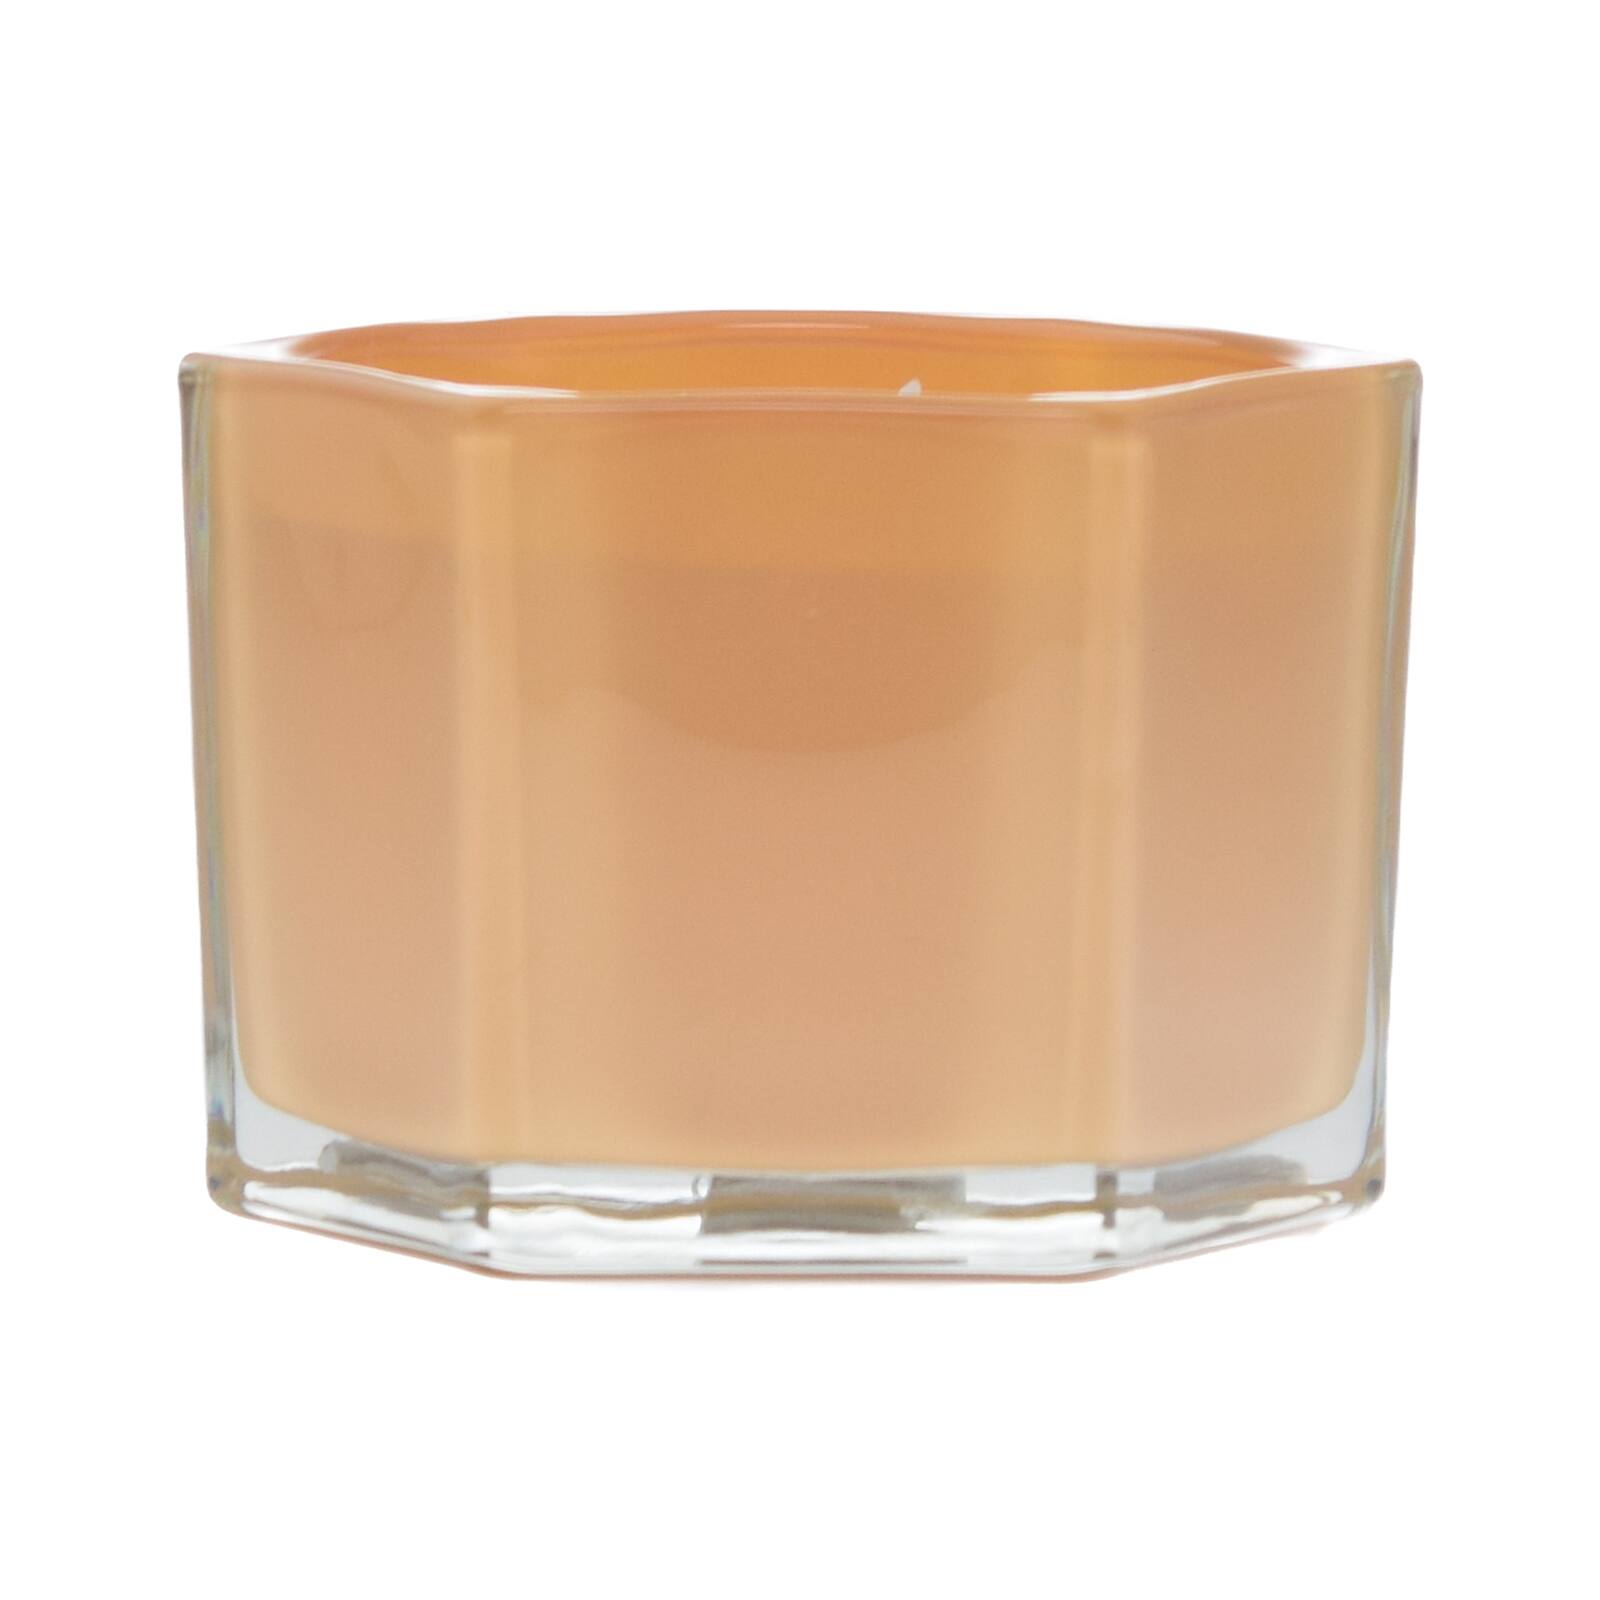 Citrus &#x26; Amber 2-Wick Jar Candle by Ashland&#xAE;